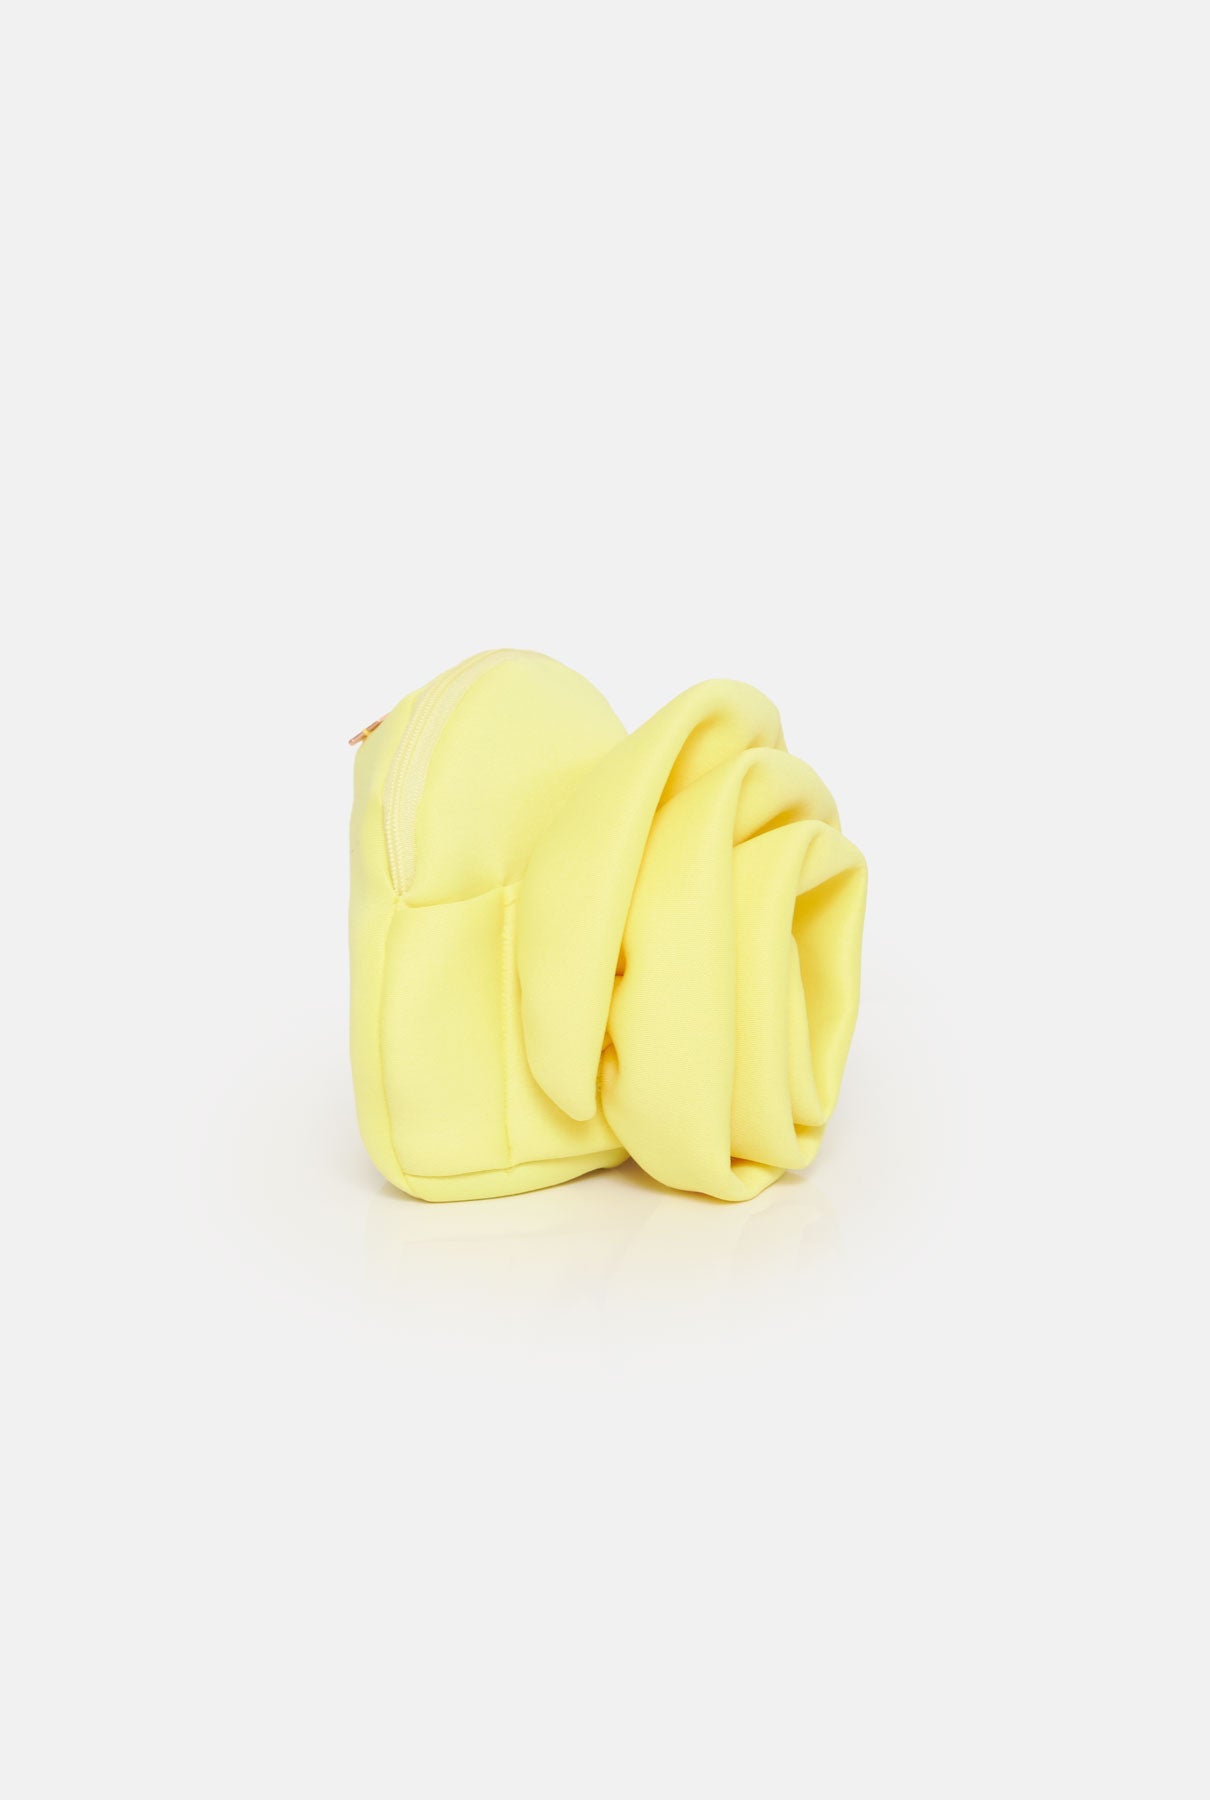 Pulseta neoprene yellow bag Celina Martin